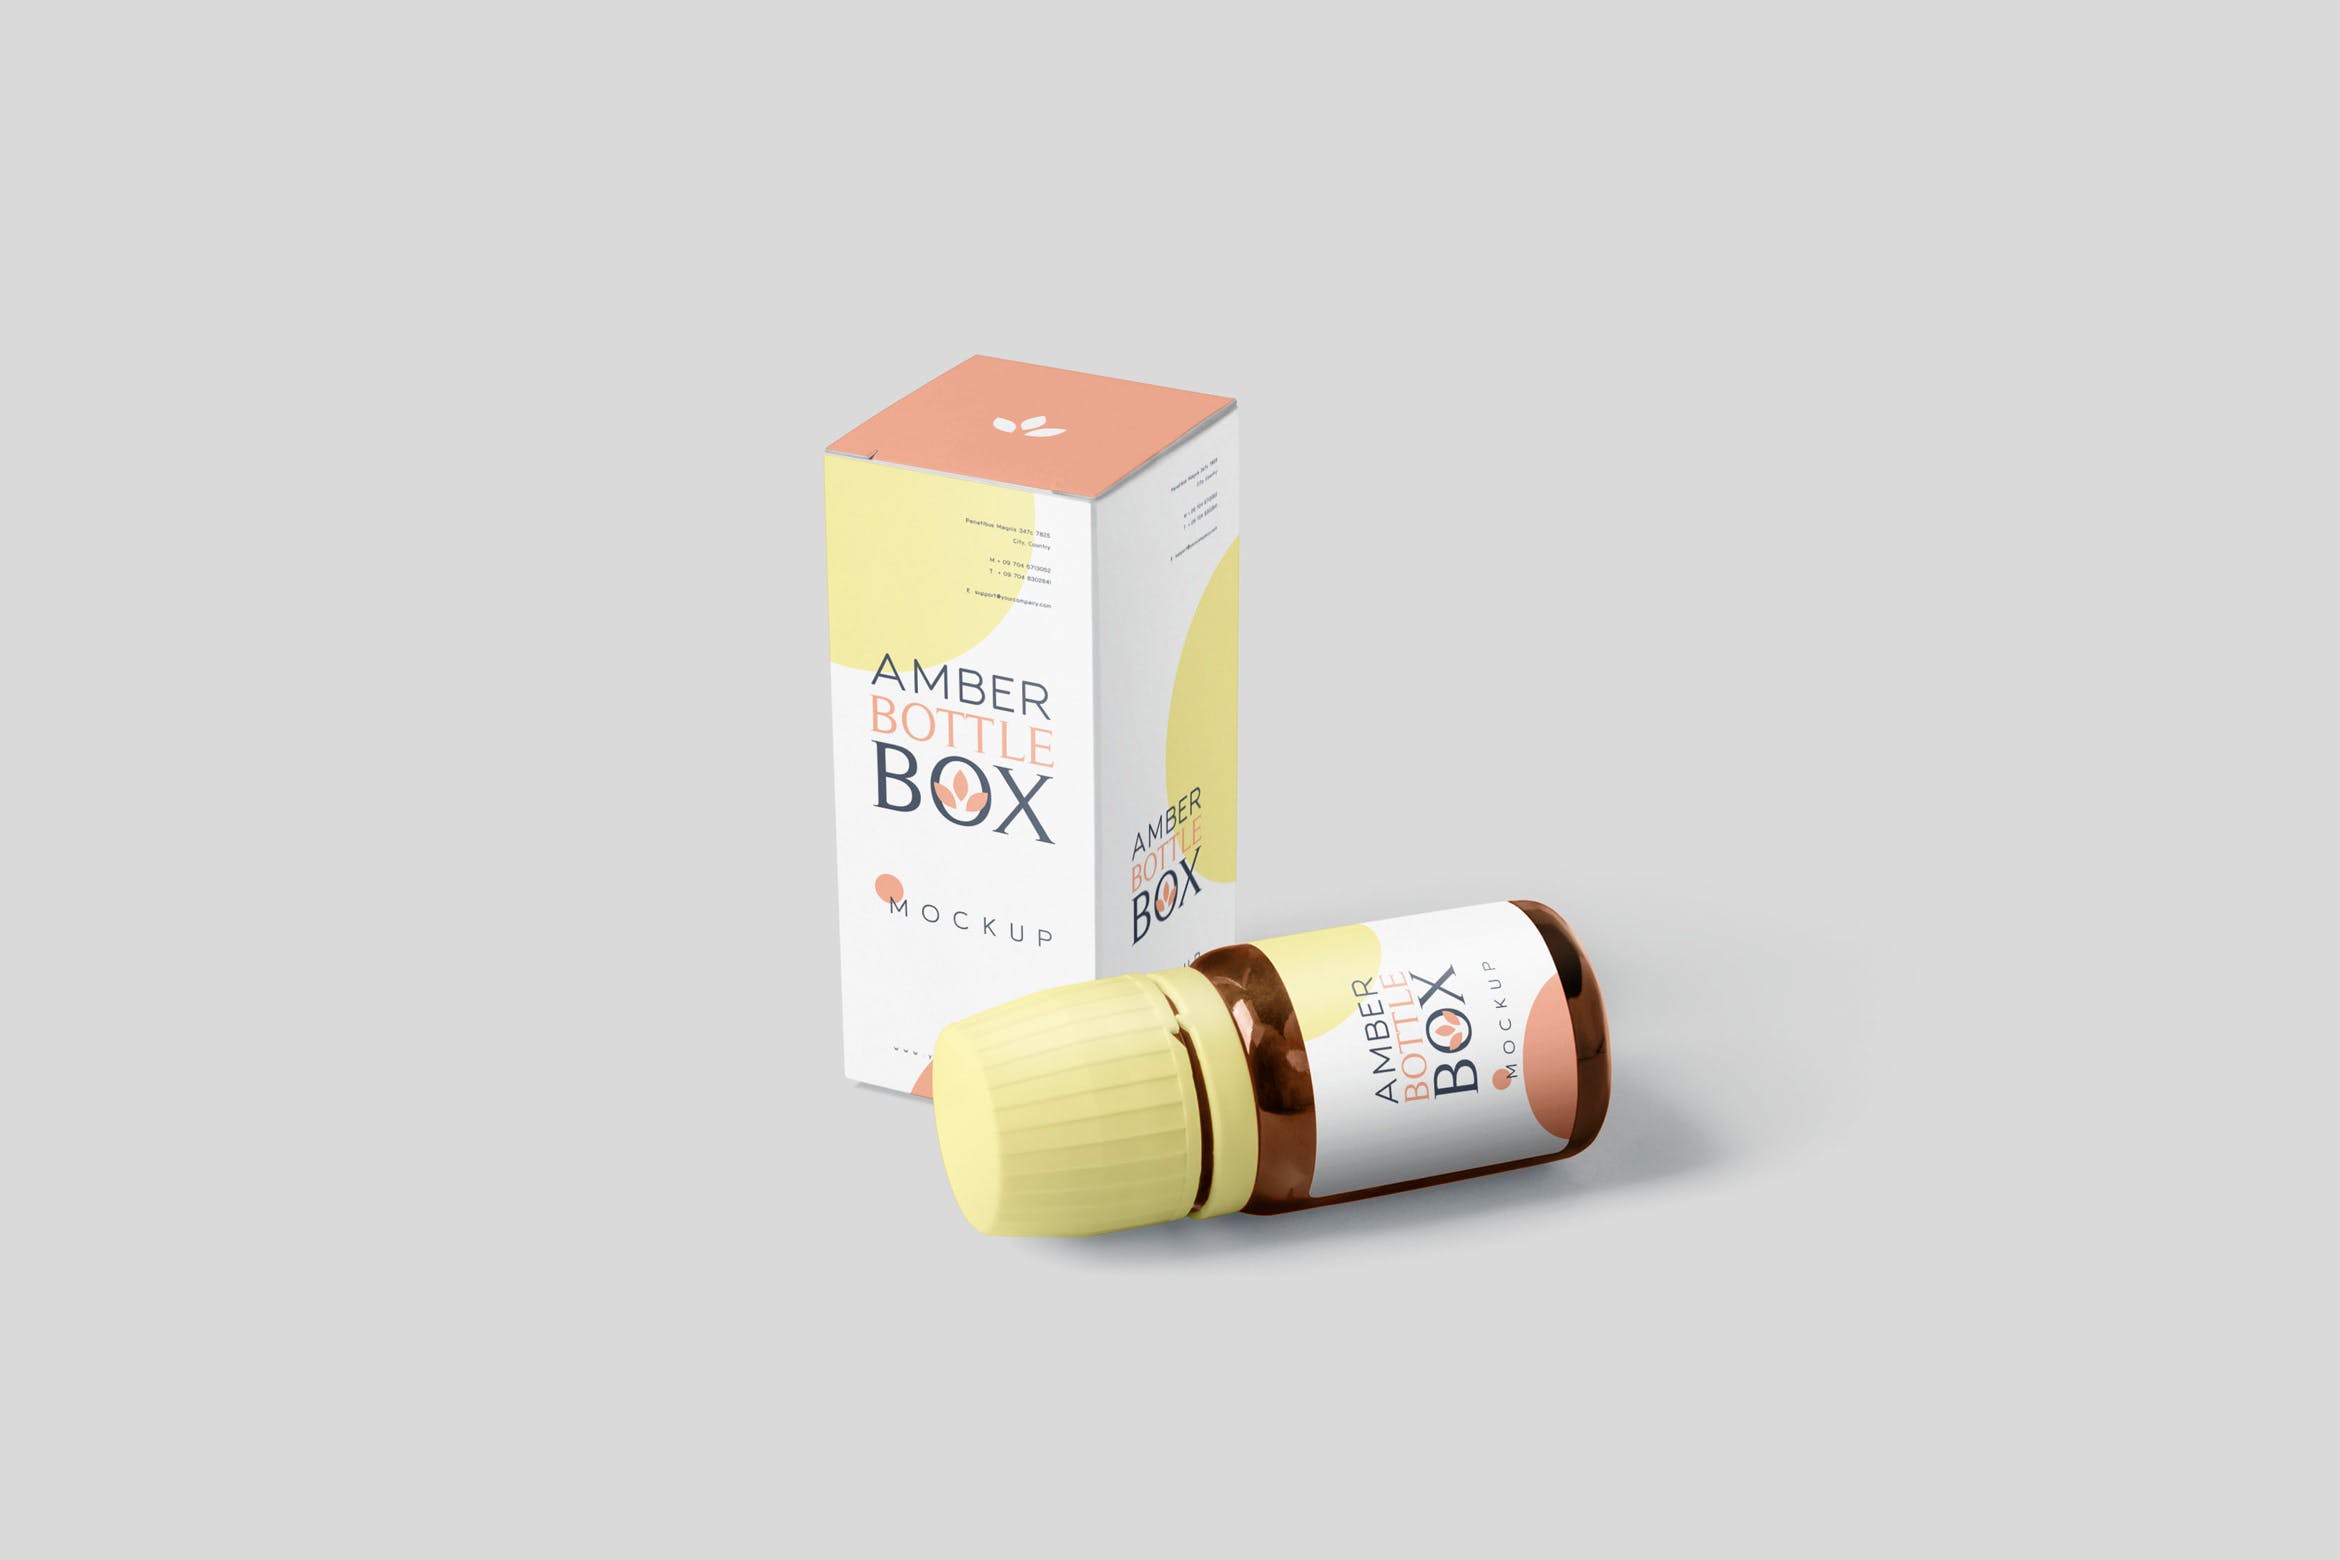 药物瓶&包装纸盒设计图素材库精选模板 Amber Bottle Box Mockup Set插图